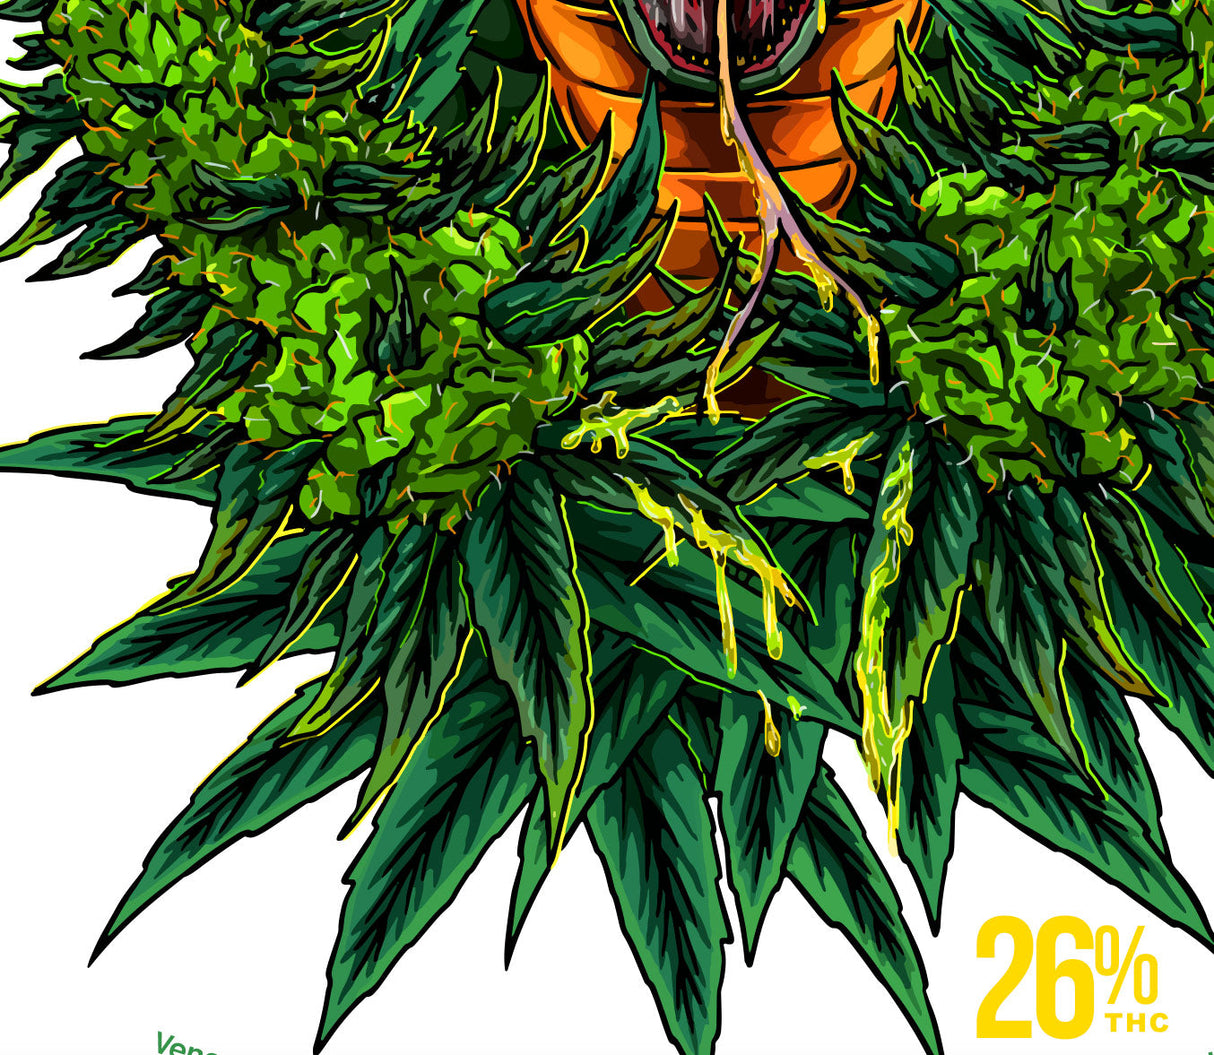 StonerDays Venom OG graphic tee with vibrant green cannabis art on white background